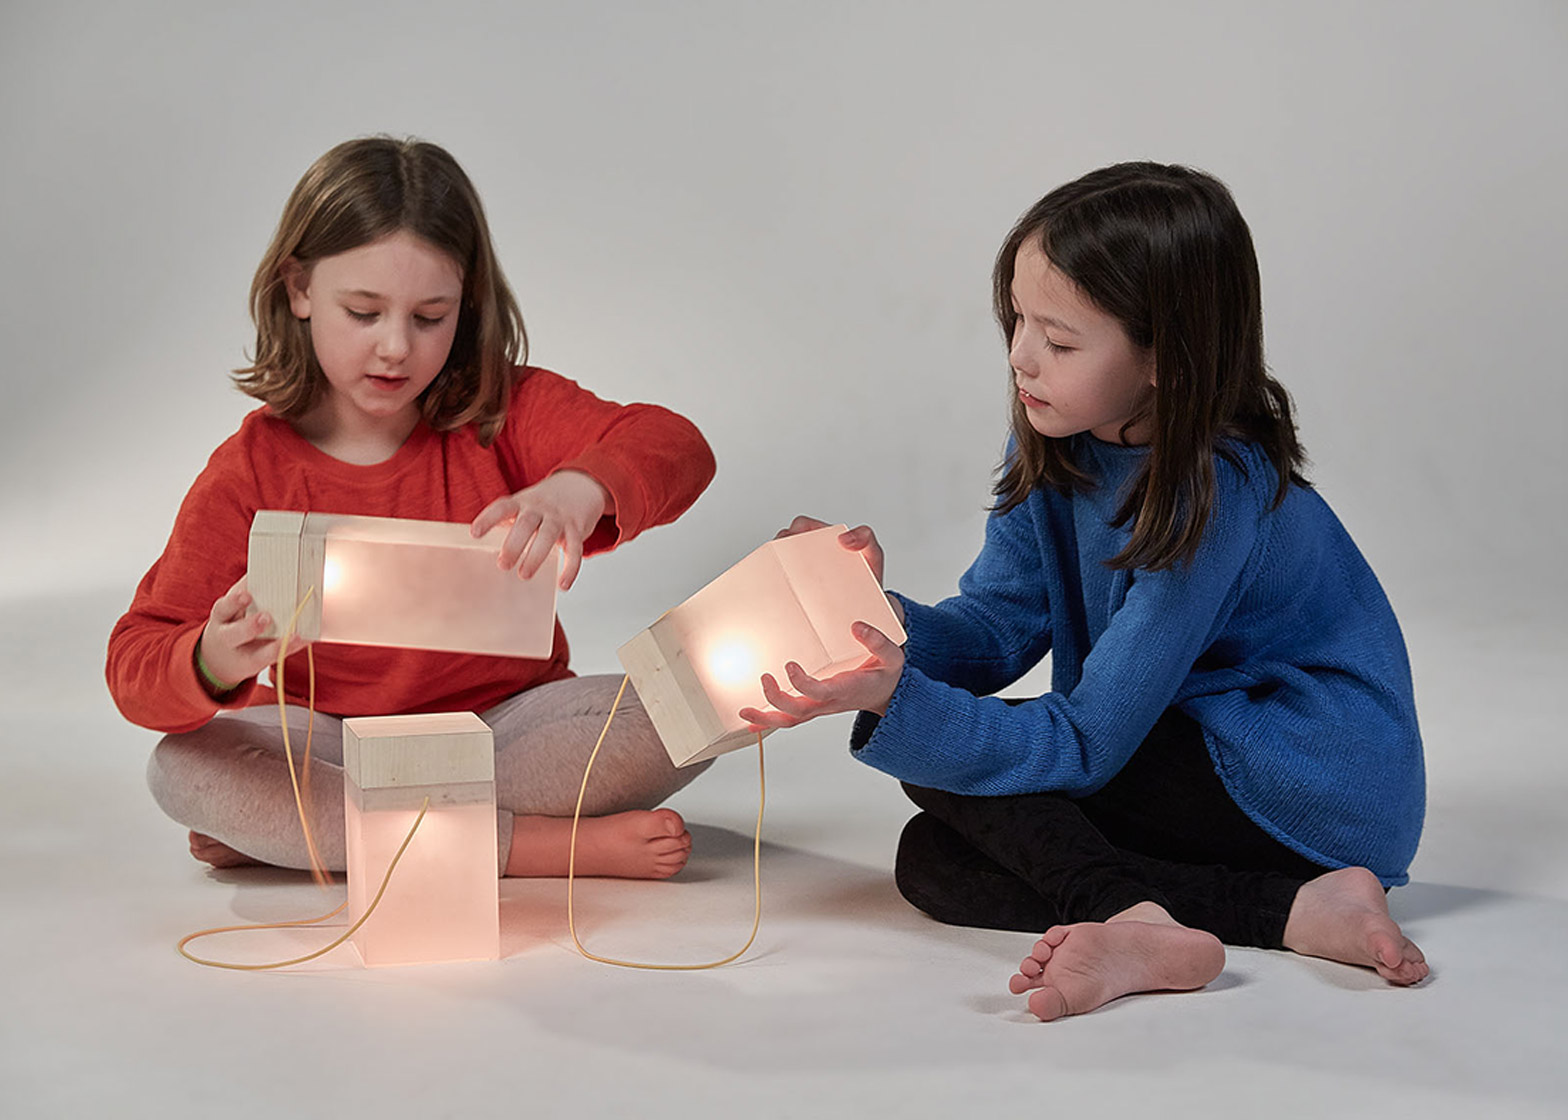 German students design children's furniture to encourage play